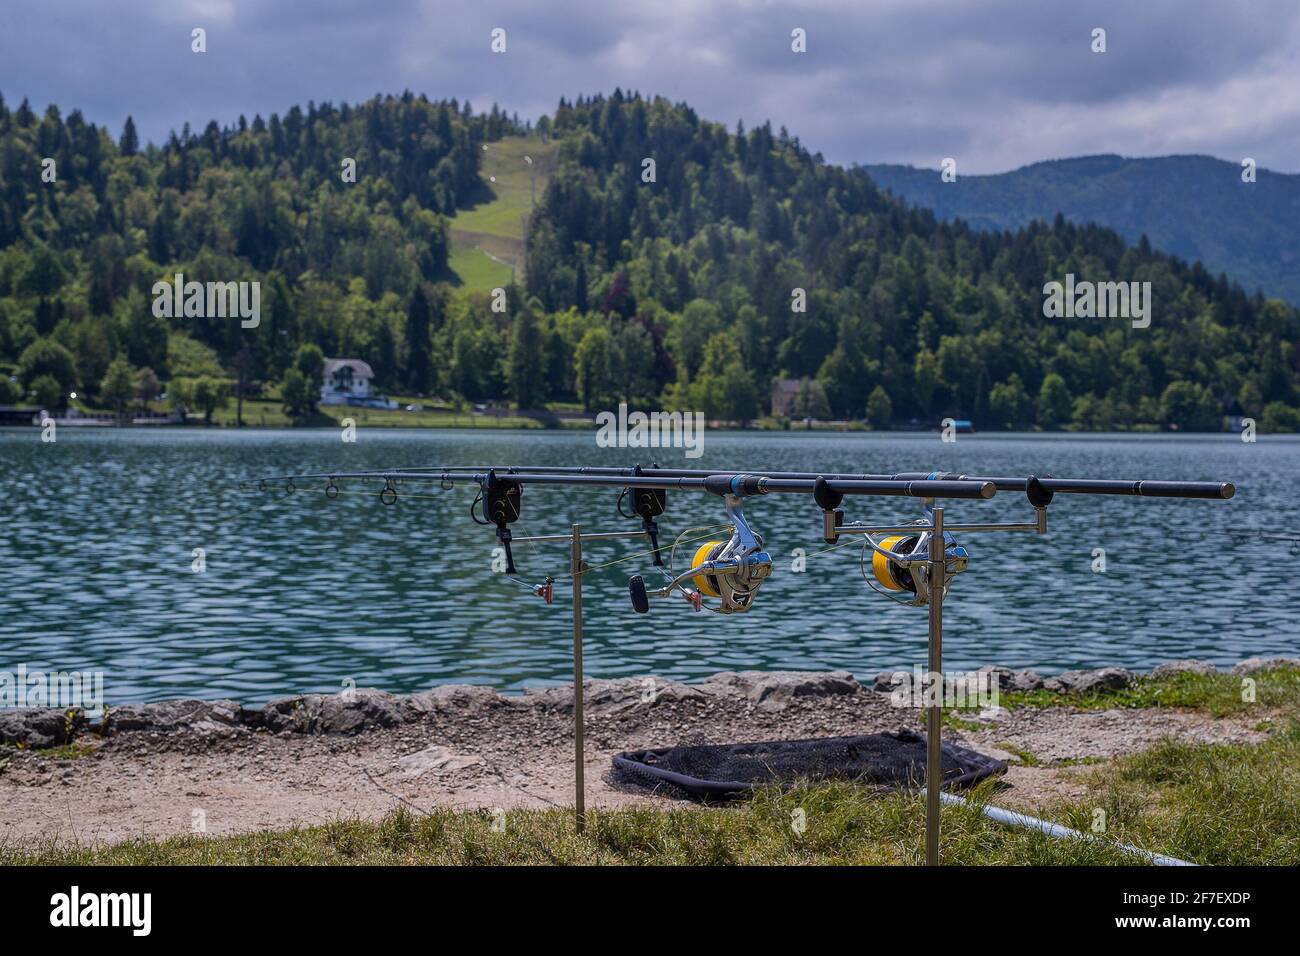 Two professional fishing rods on lake Bled, Slovenia. Fishermen